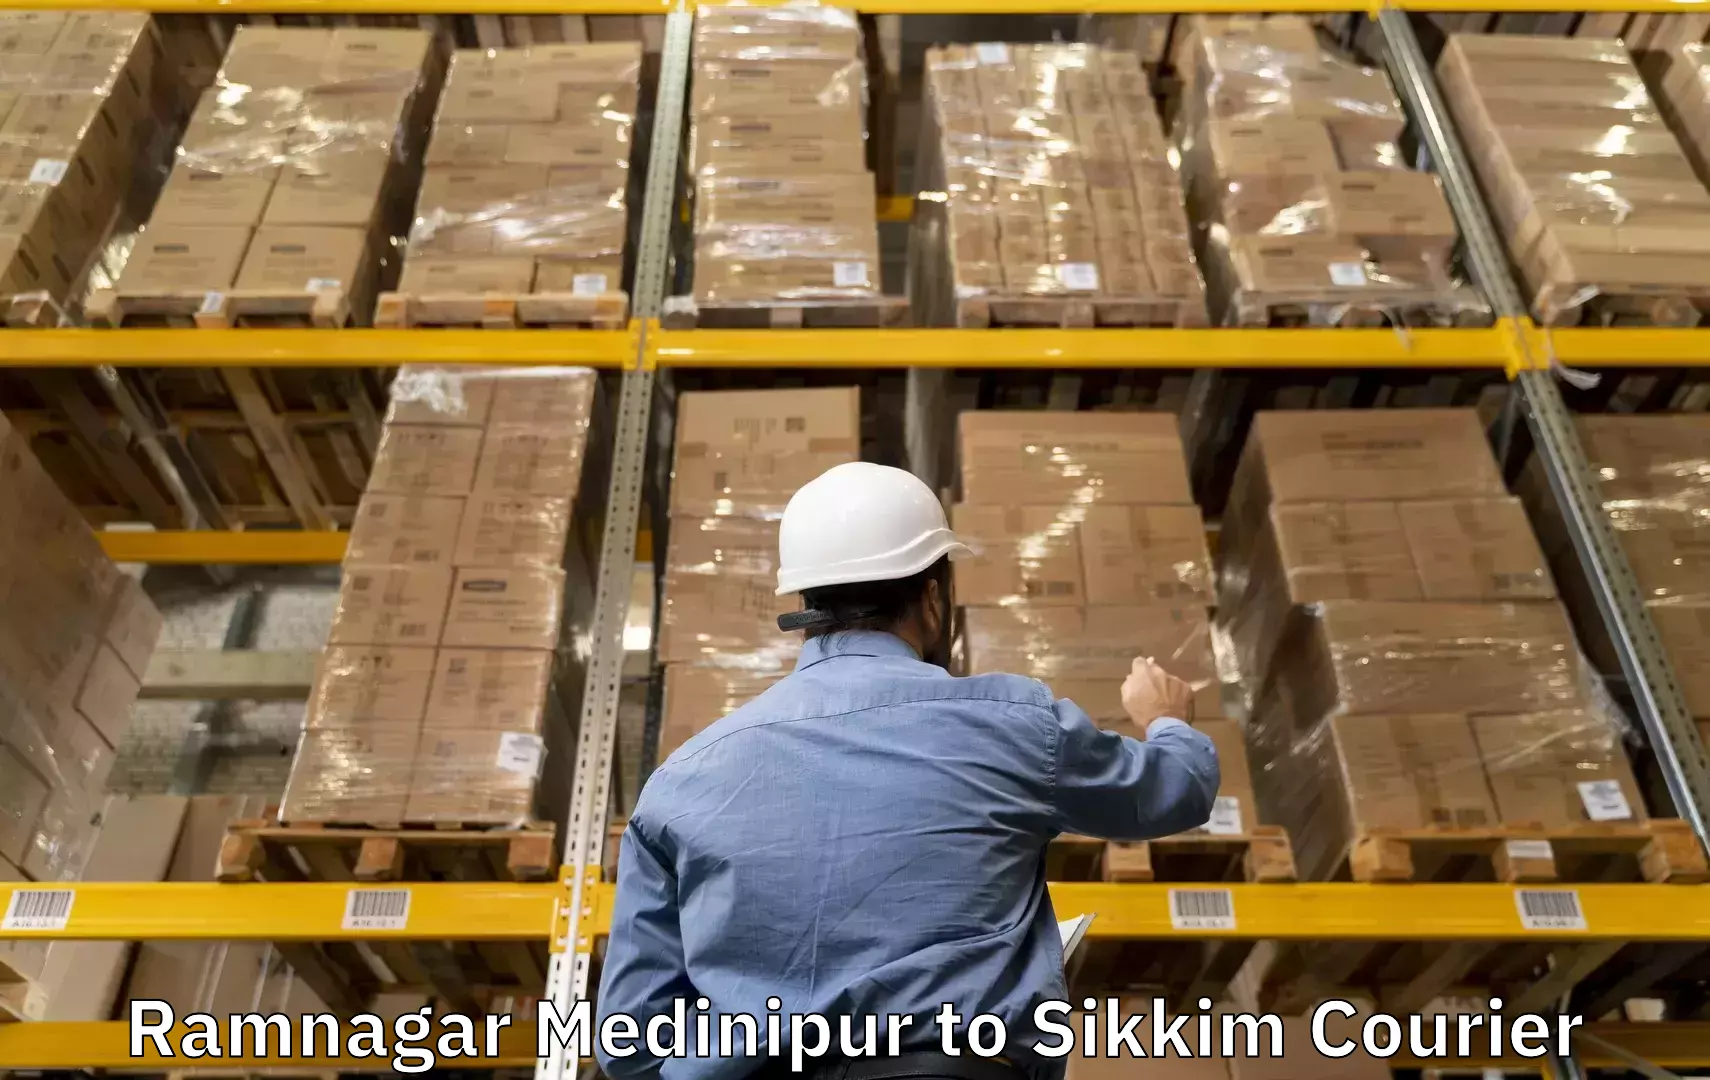 Baggage shipping service Ramnagar Medinipur to Sikkim